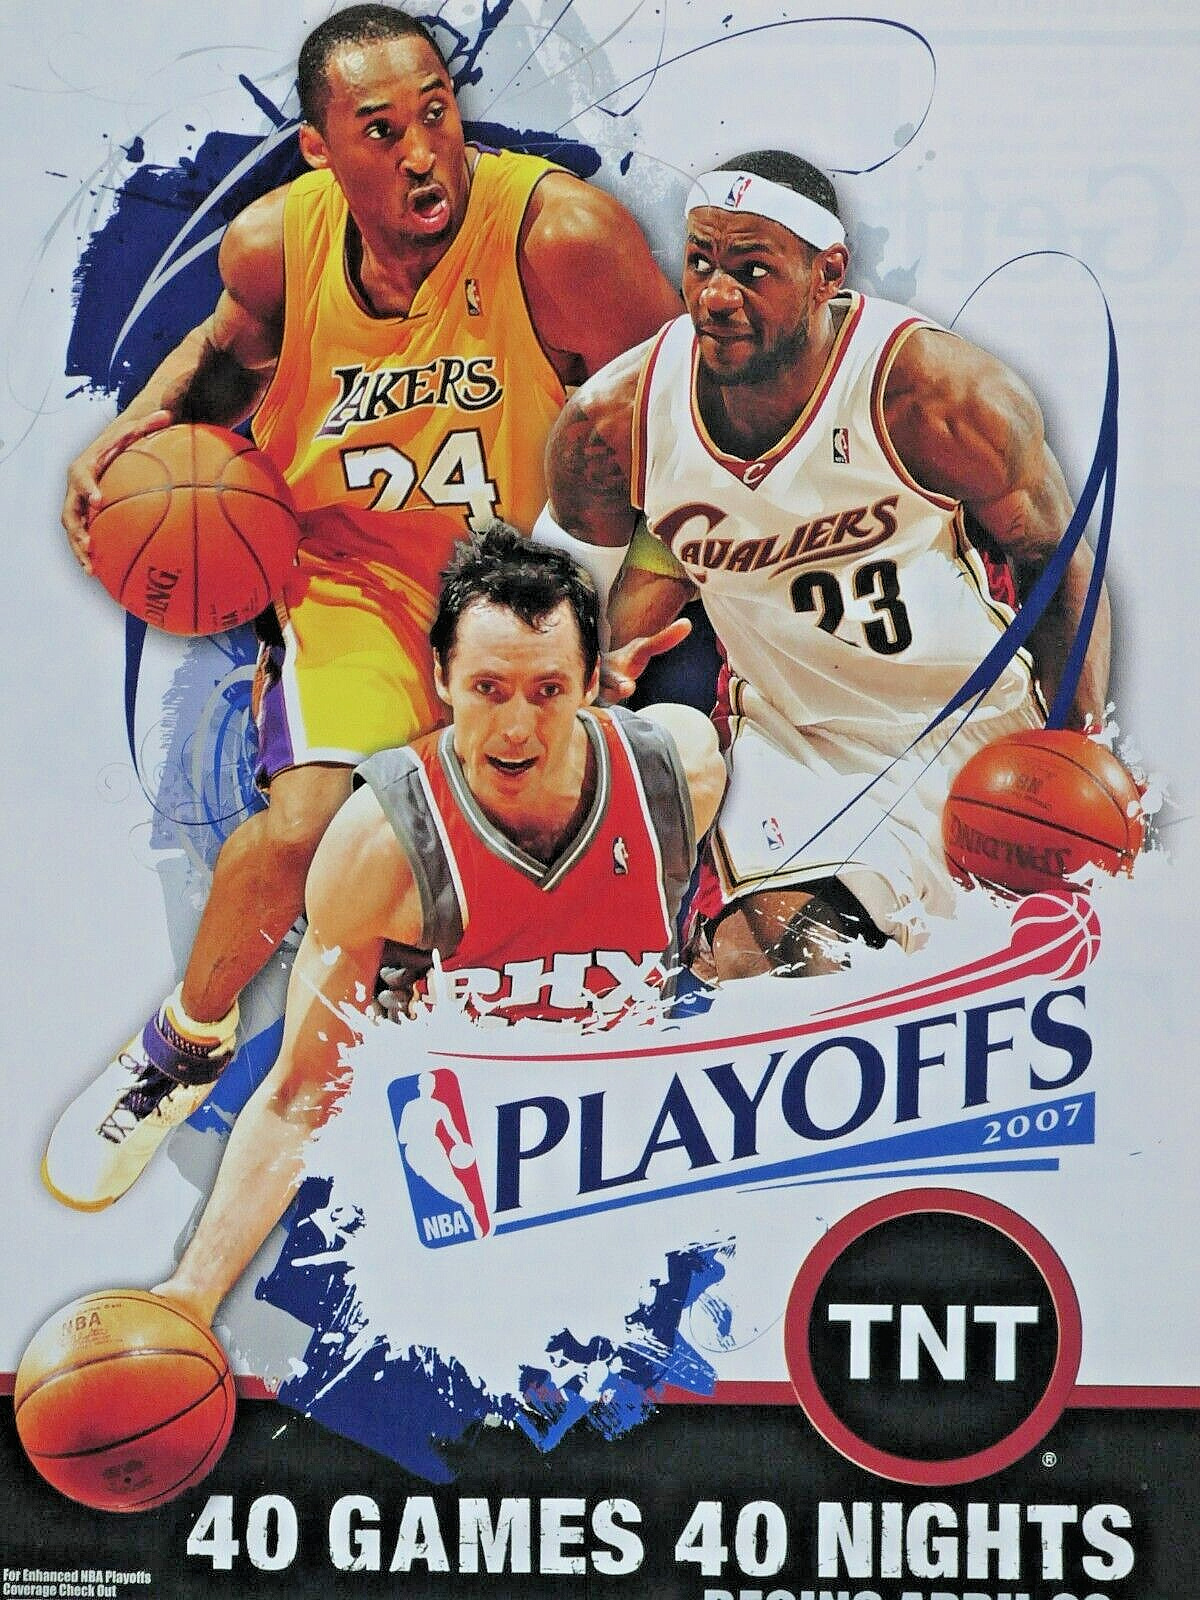 Kobe Bryan Lakers LeBron James Cavs Steve Nash Suns 2007 TNT Original Print Ad